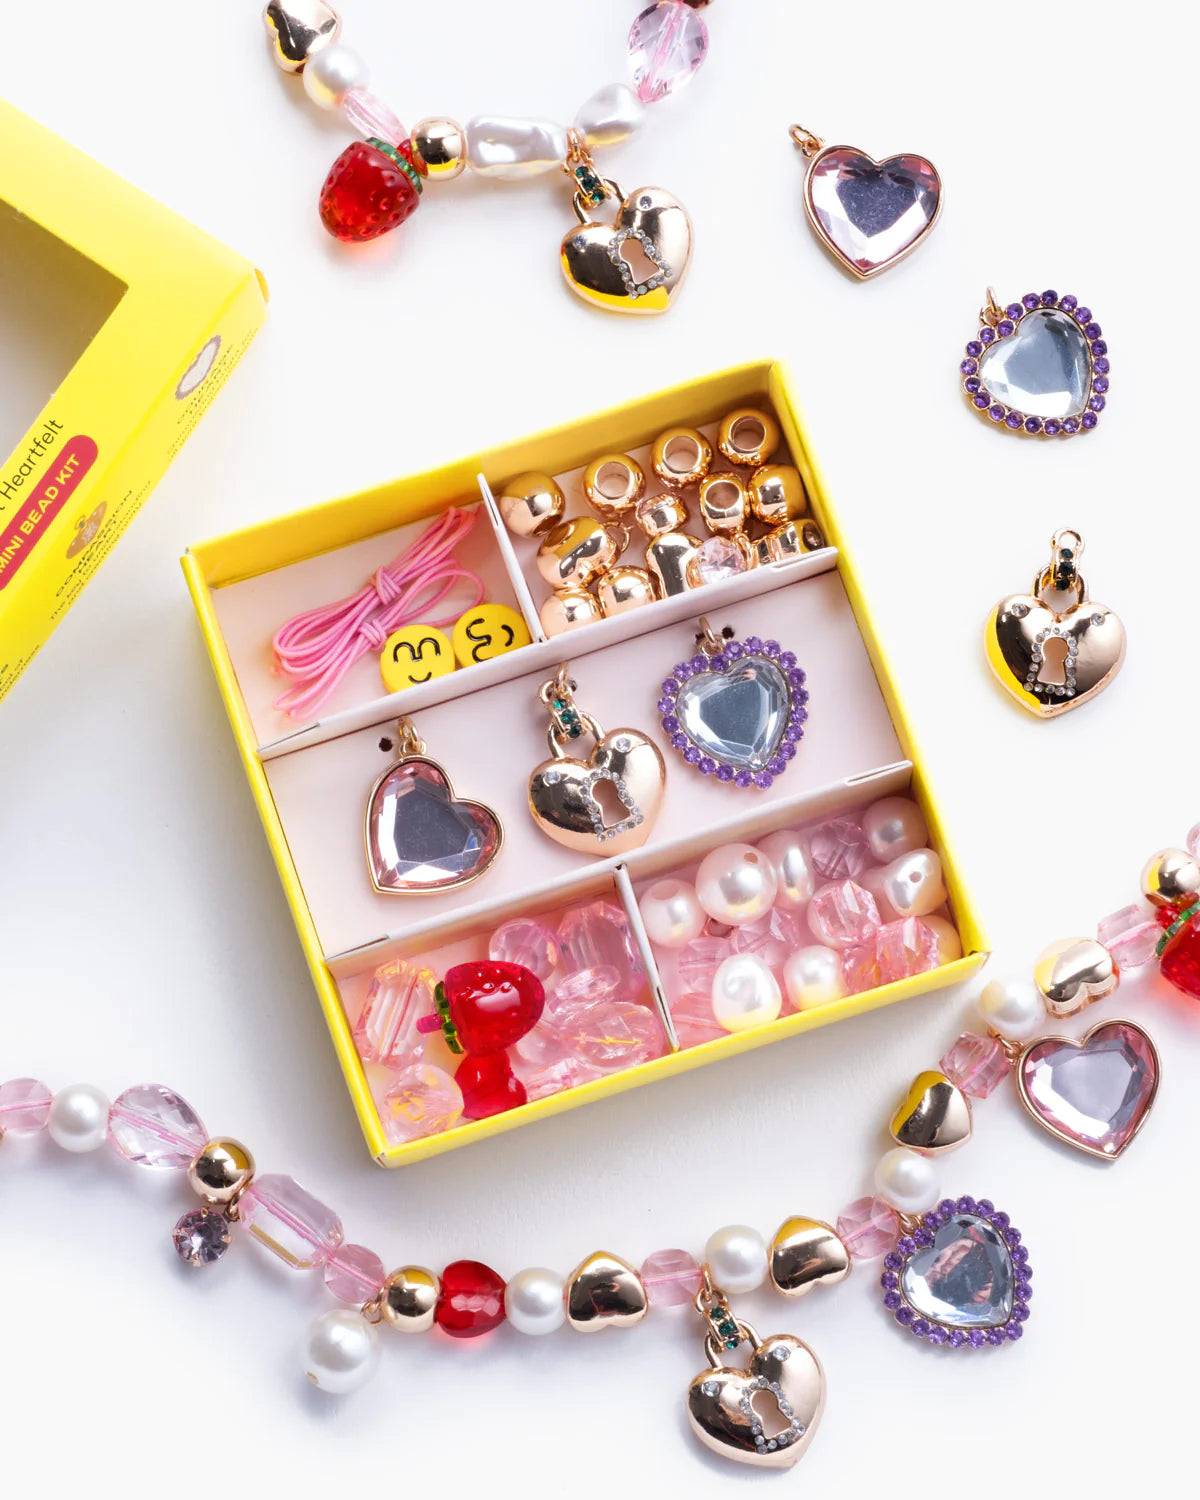 Super Smalls Make It Heartfelt | Mini Bead Kit